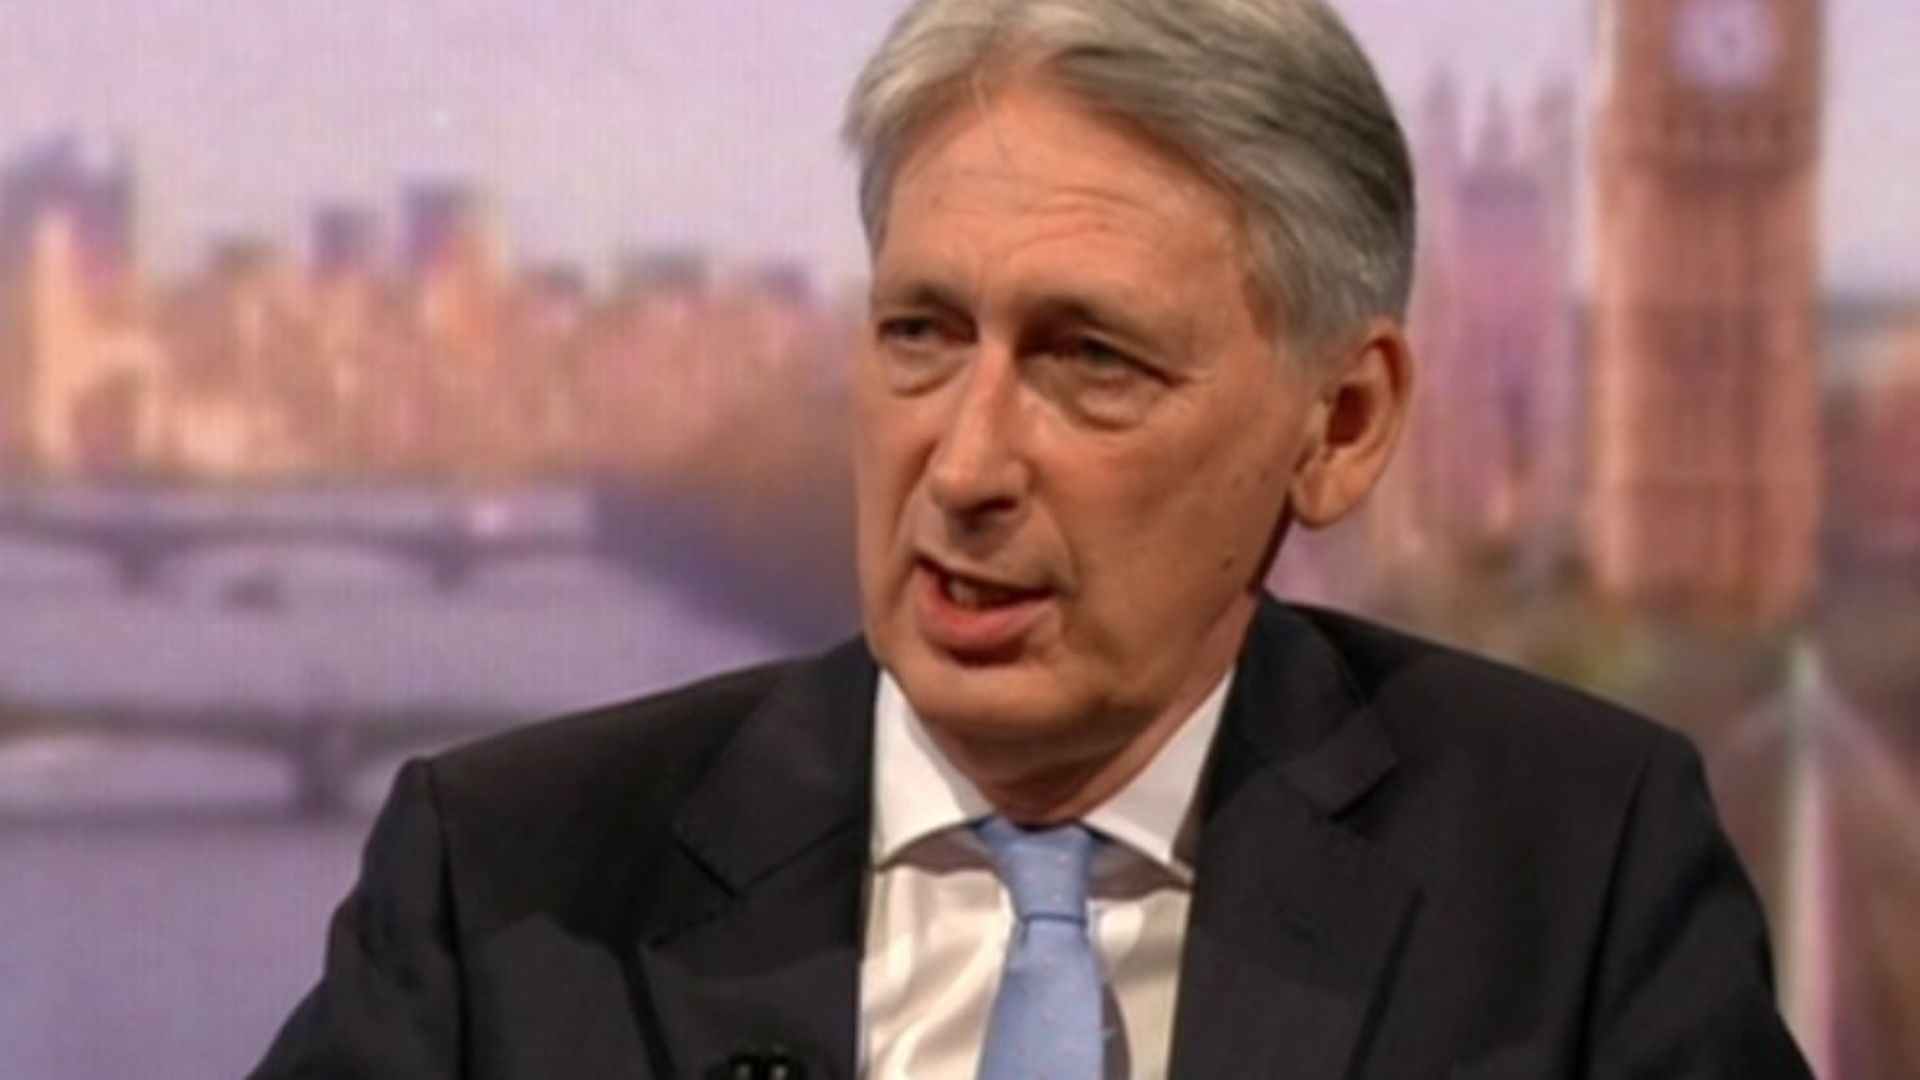 Chancellor Philip Hammond speaking on the BBC's Andrew Marr Show (Pic: BBC) - Credit: BBC